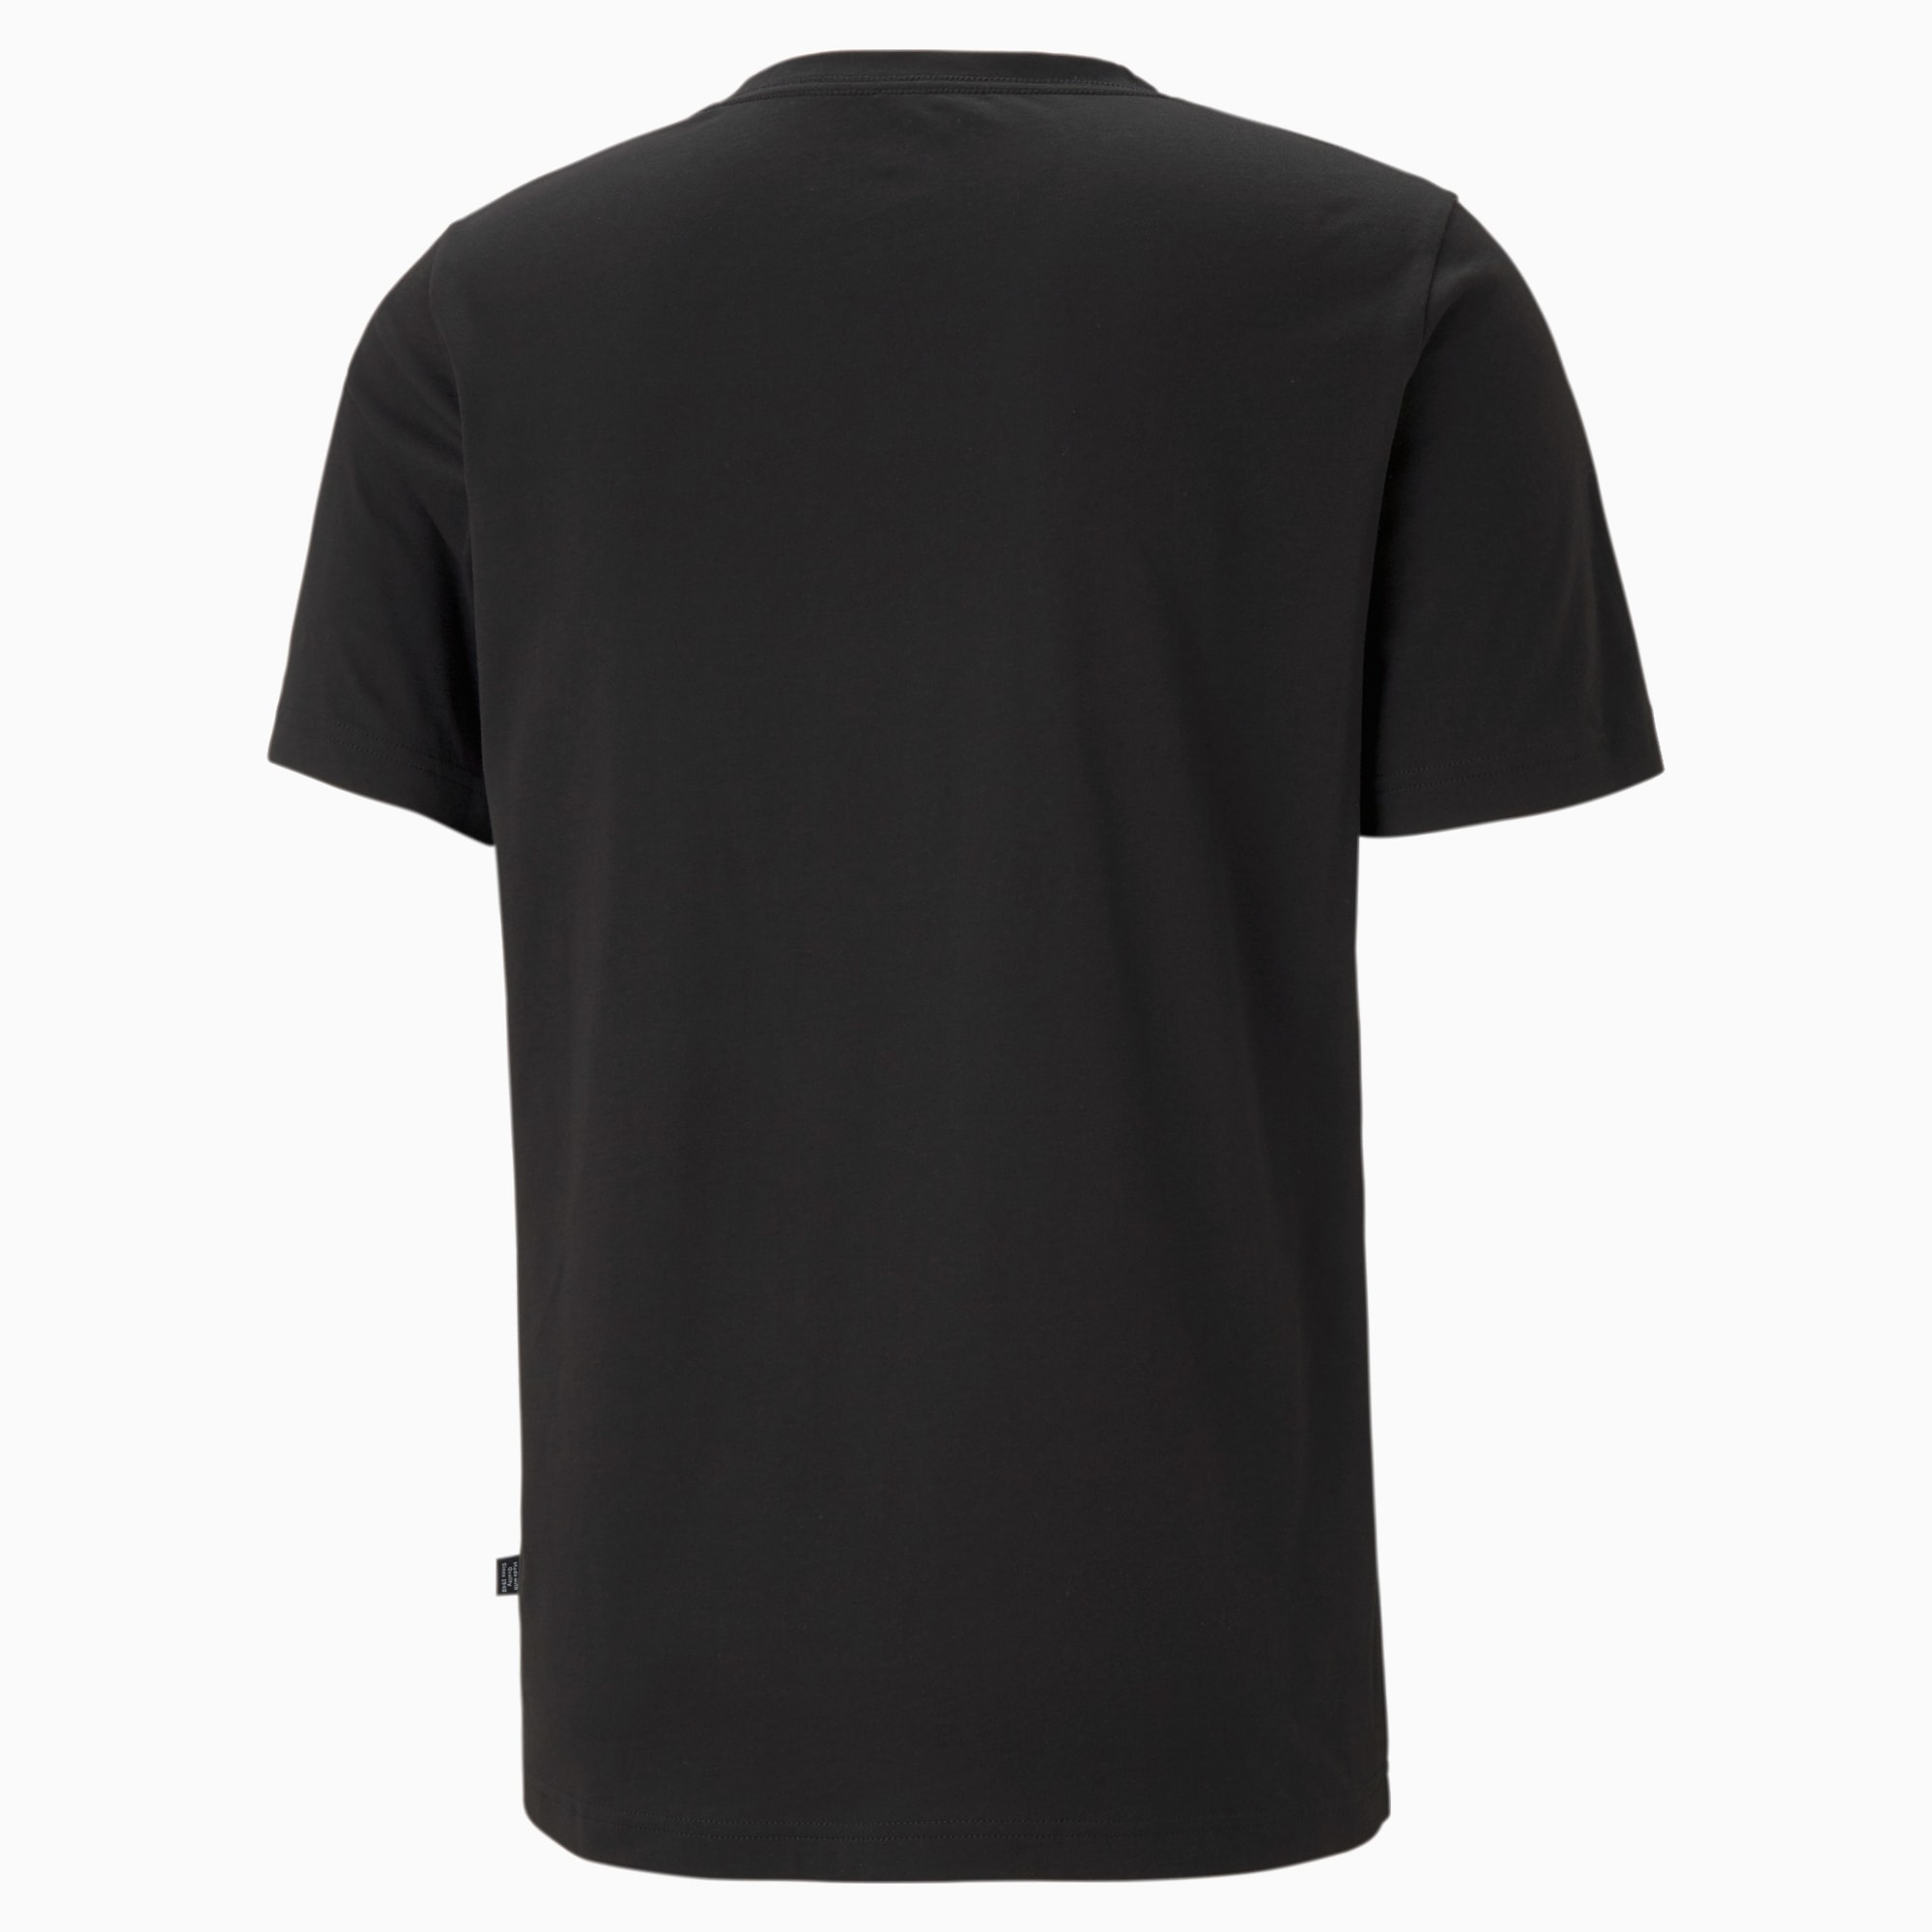 PUMA Essentials V-Neck T-Shirt Men, Black, Size XS, Clothing